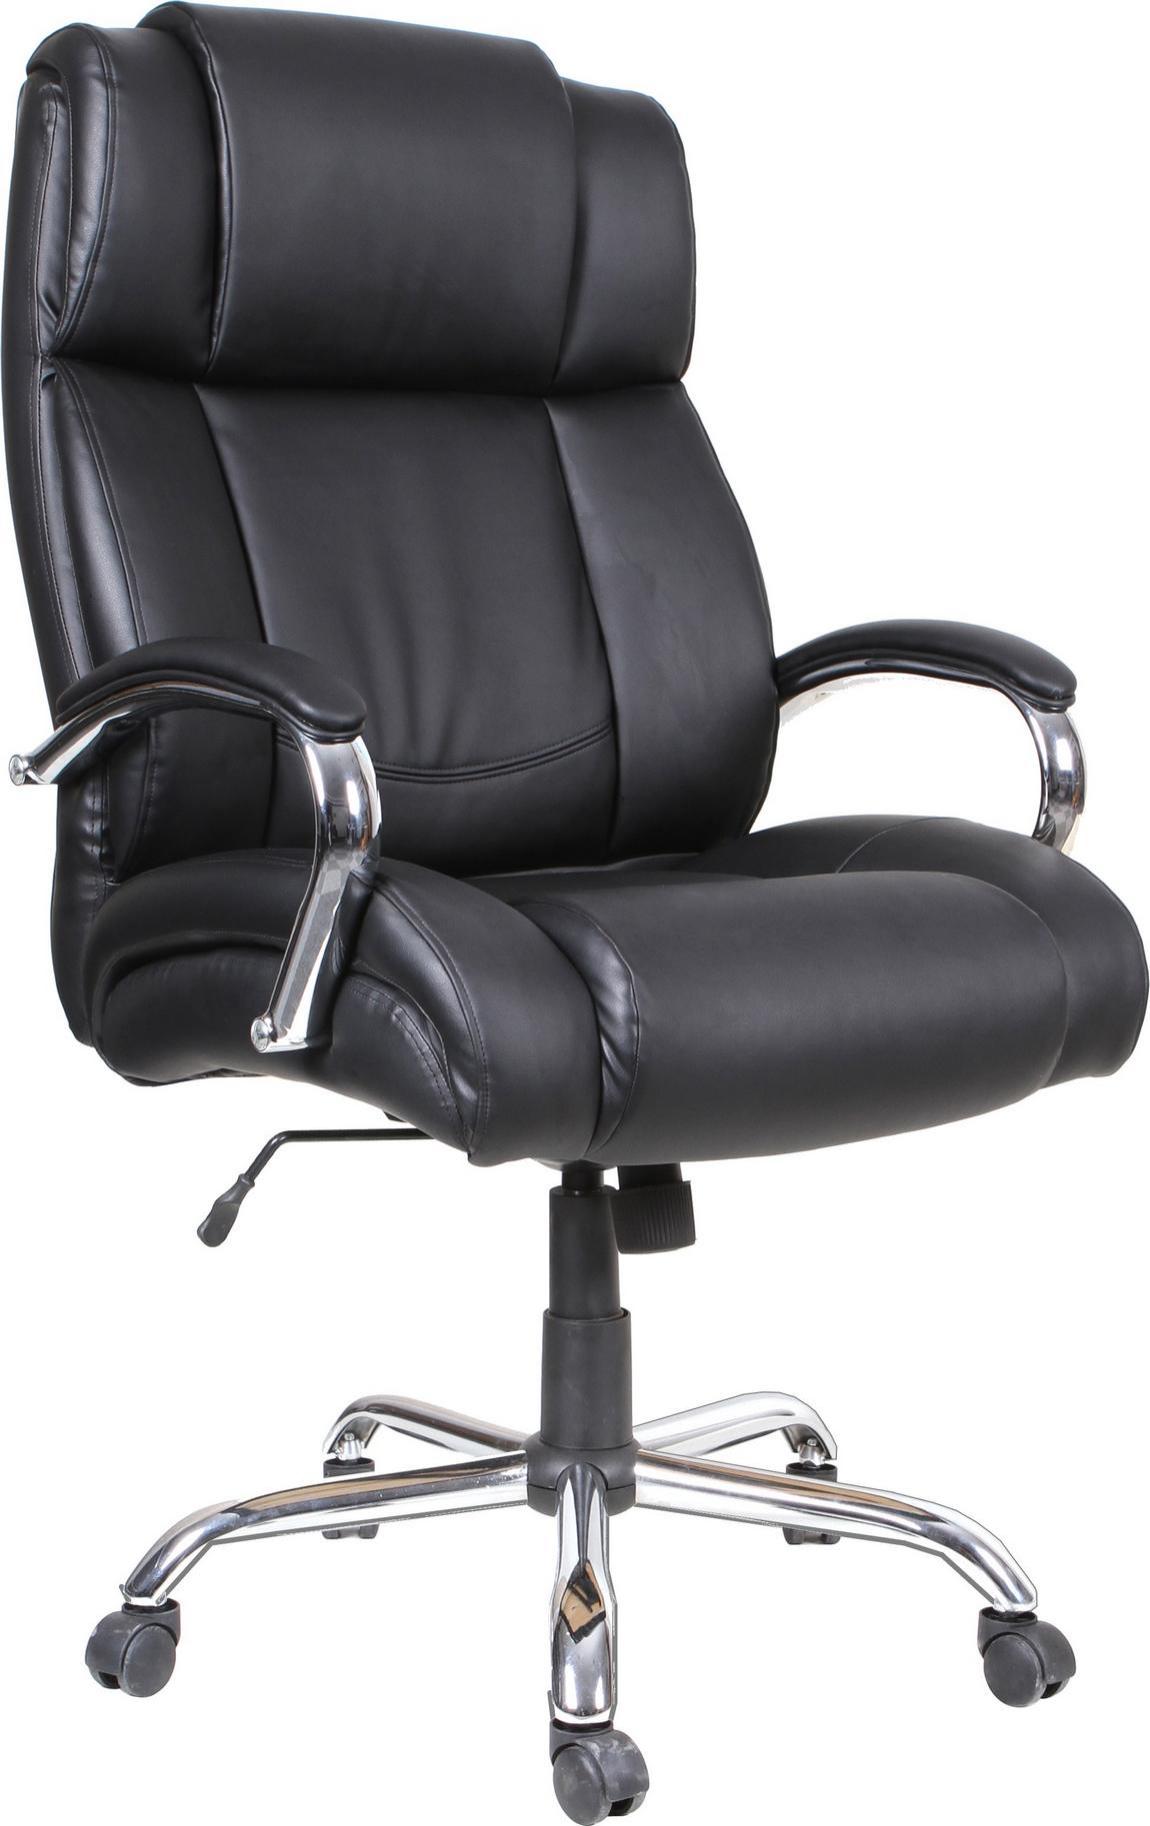 901 Heavy Duty Office Chair 450 Lbs 1 